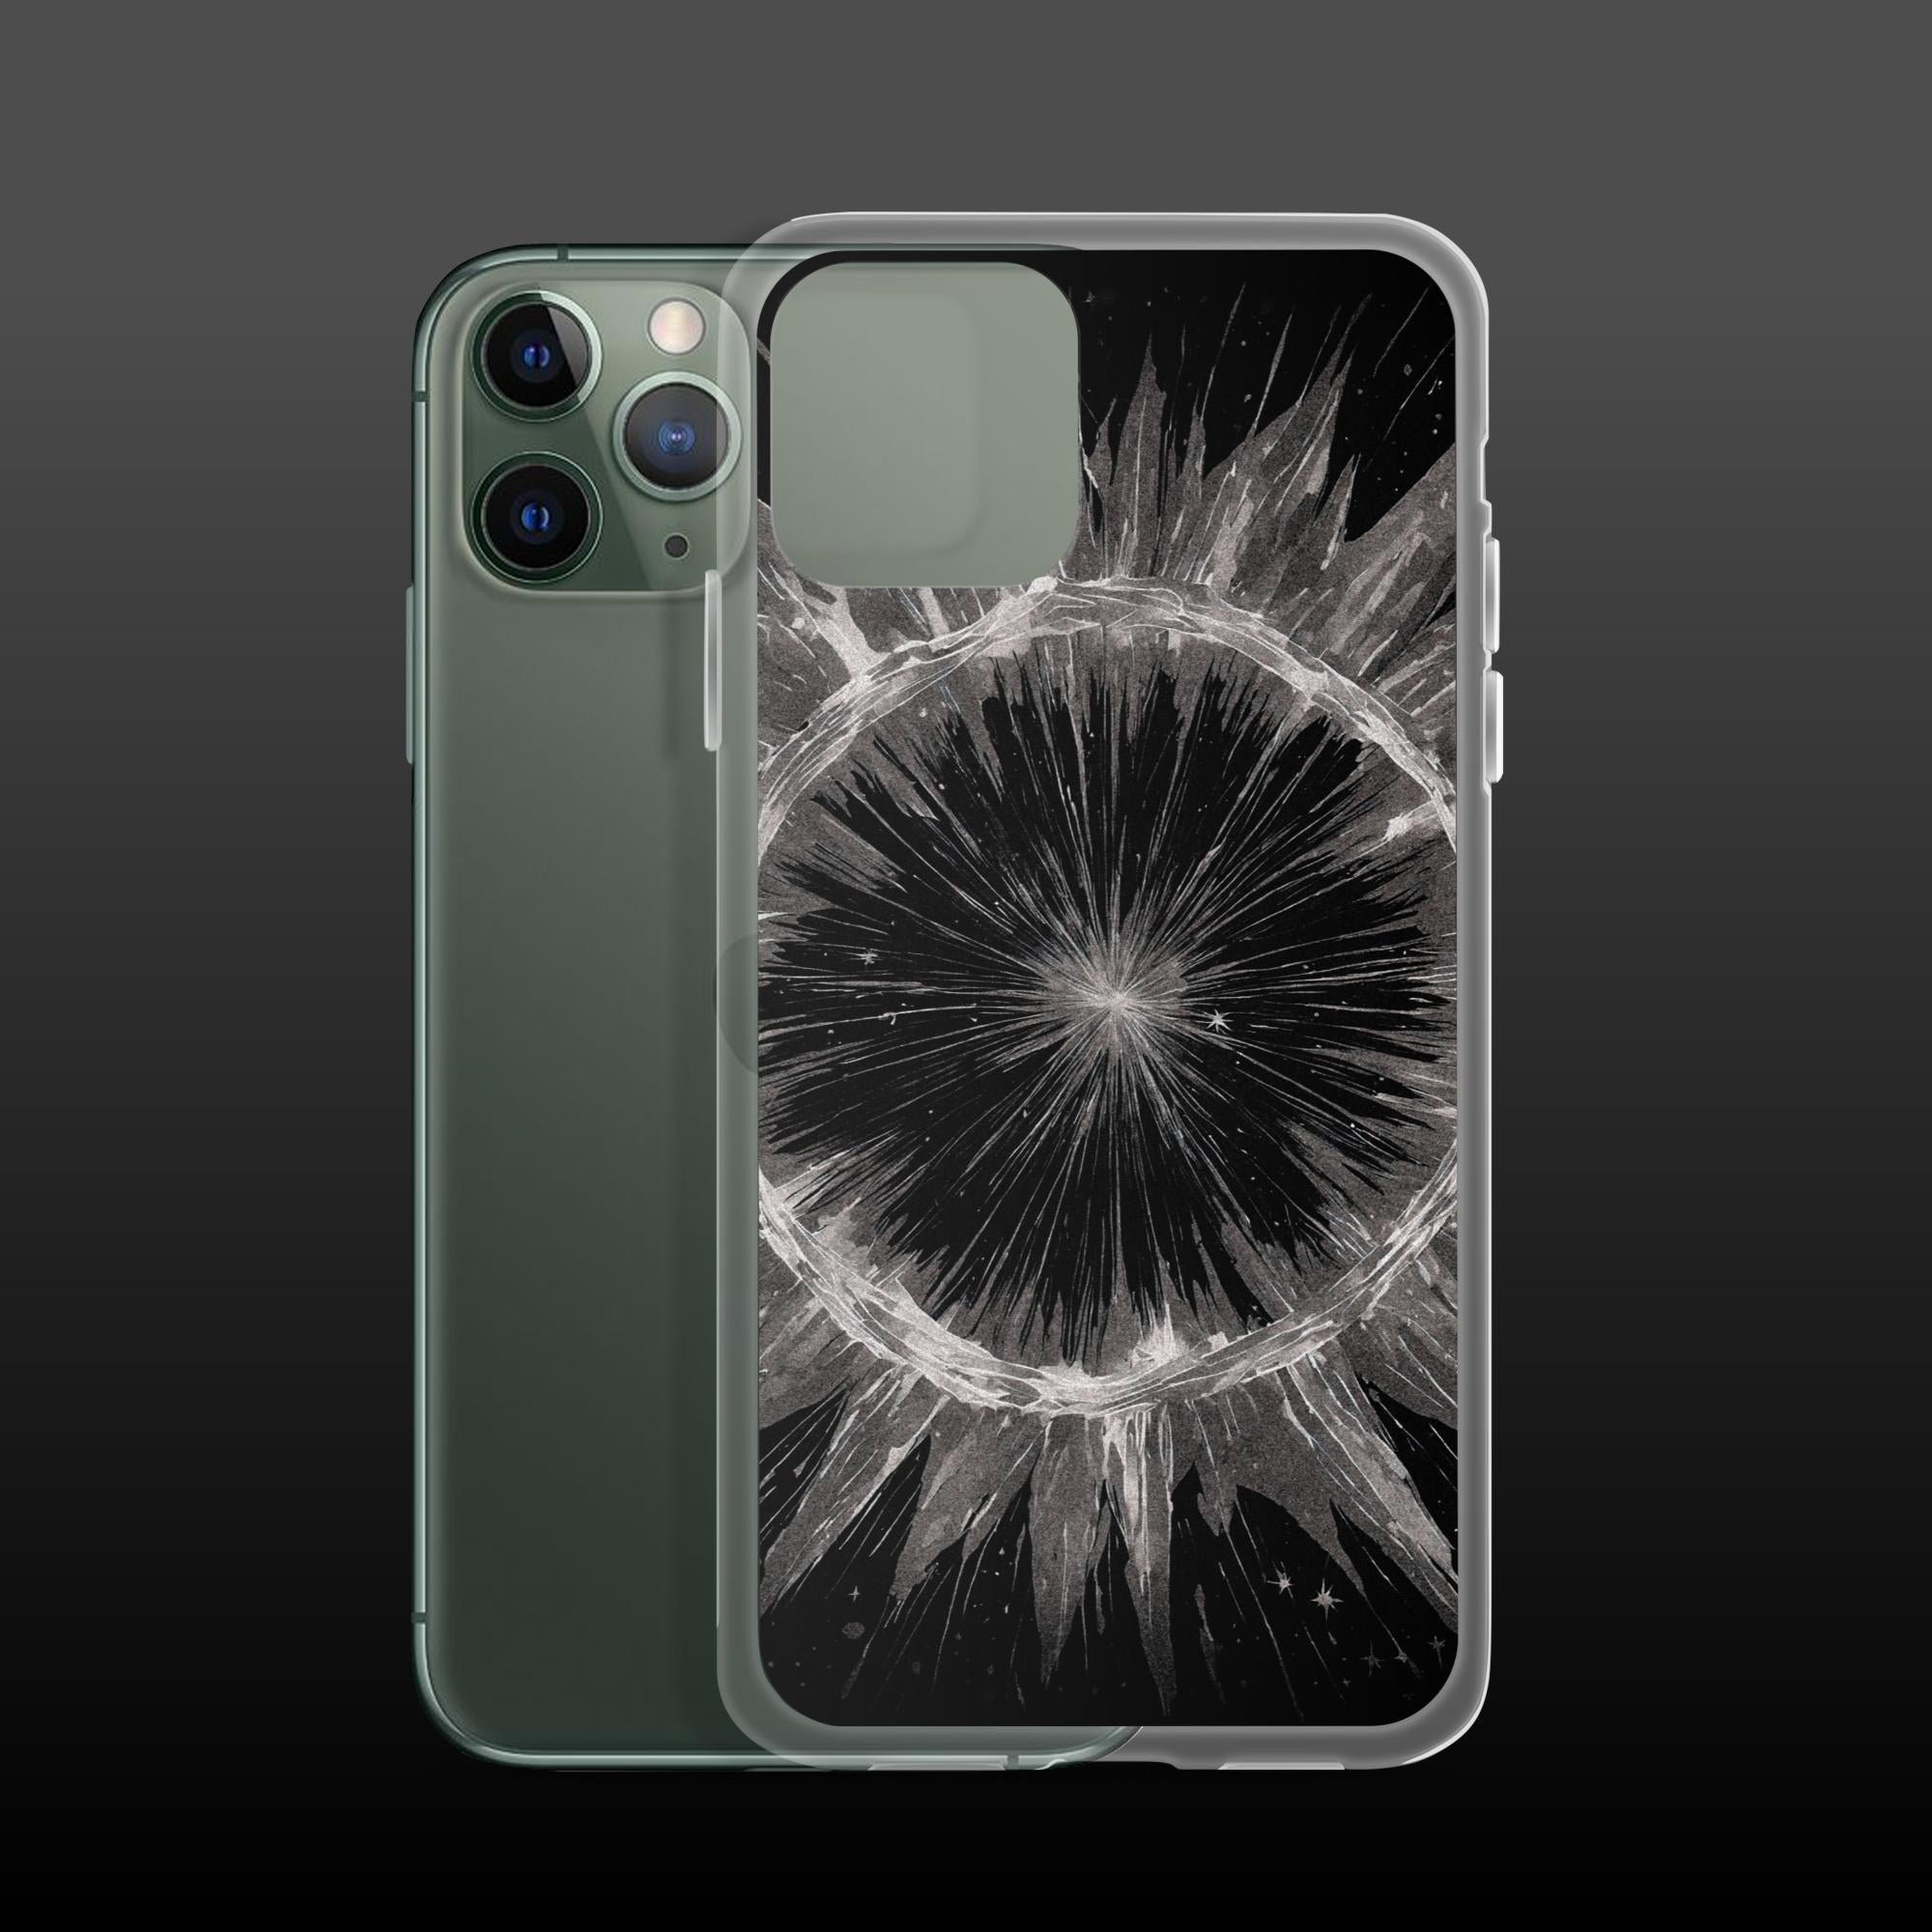 "Achromic sun" clear iphone case - Clear iphone case - Ever colorful